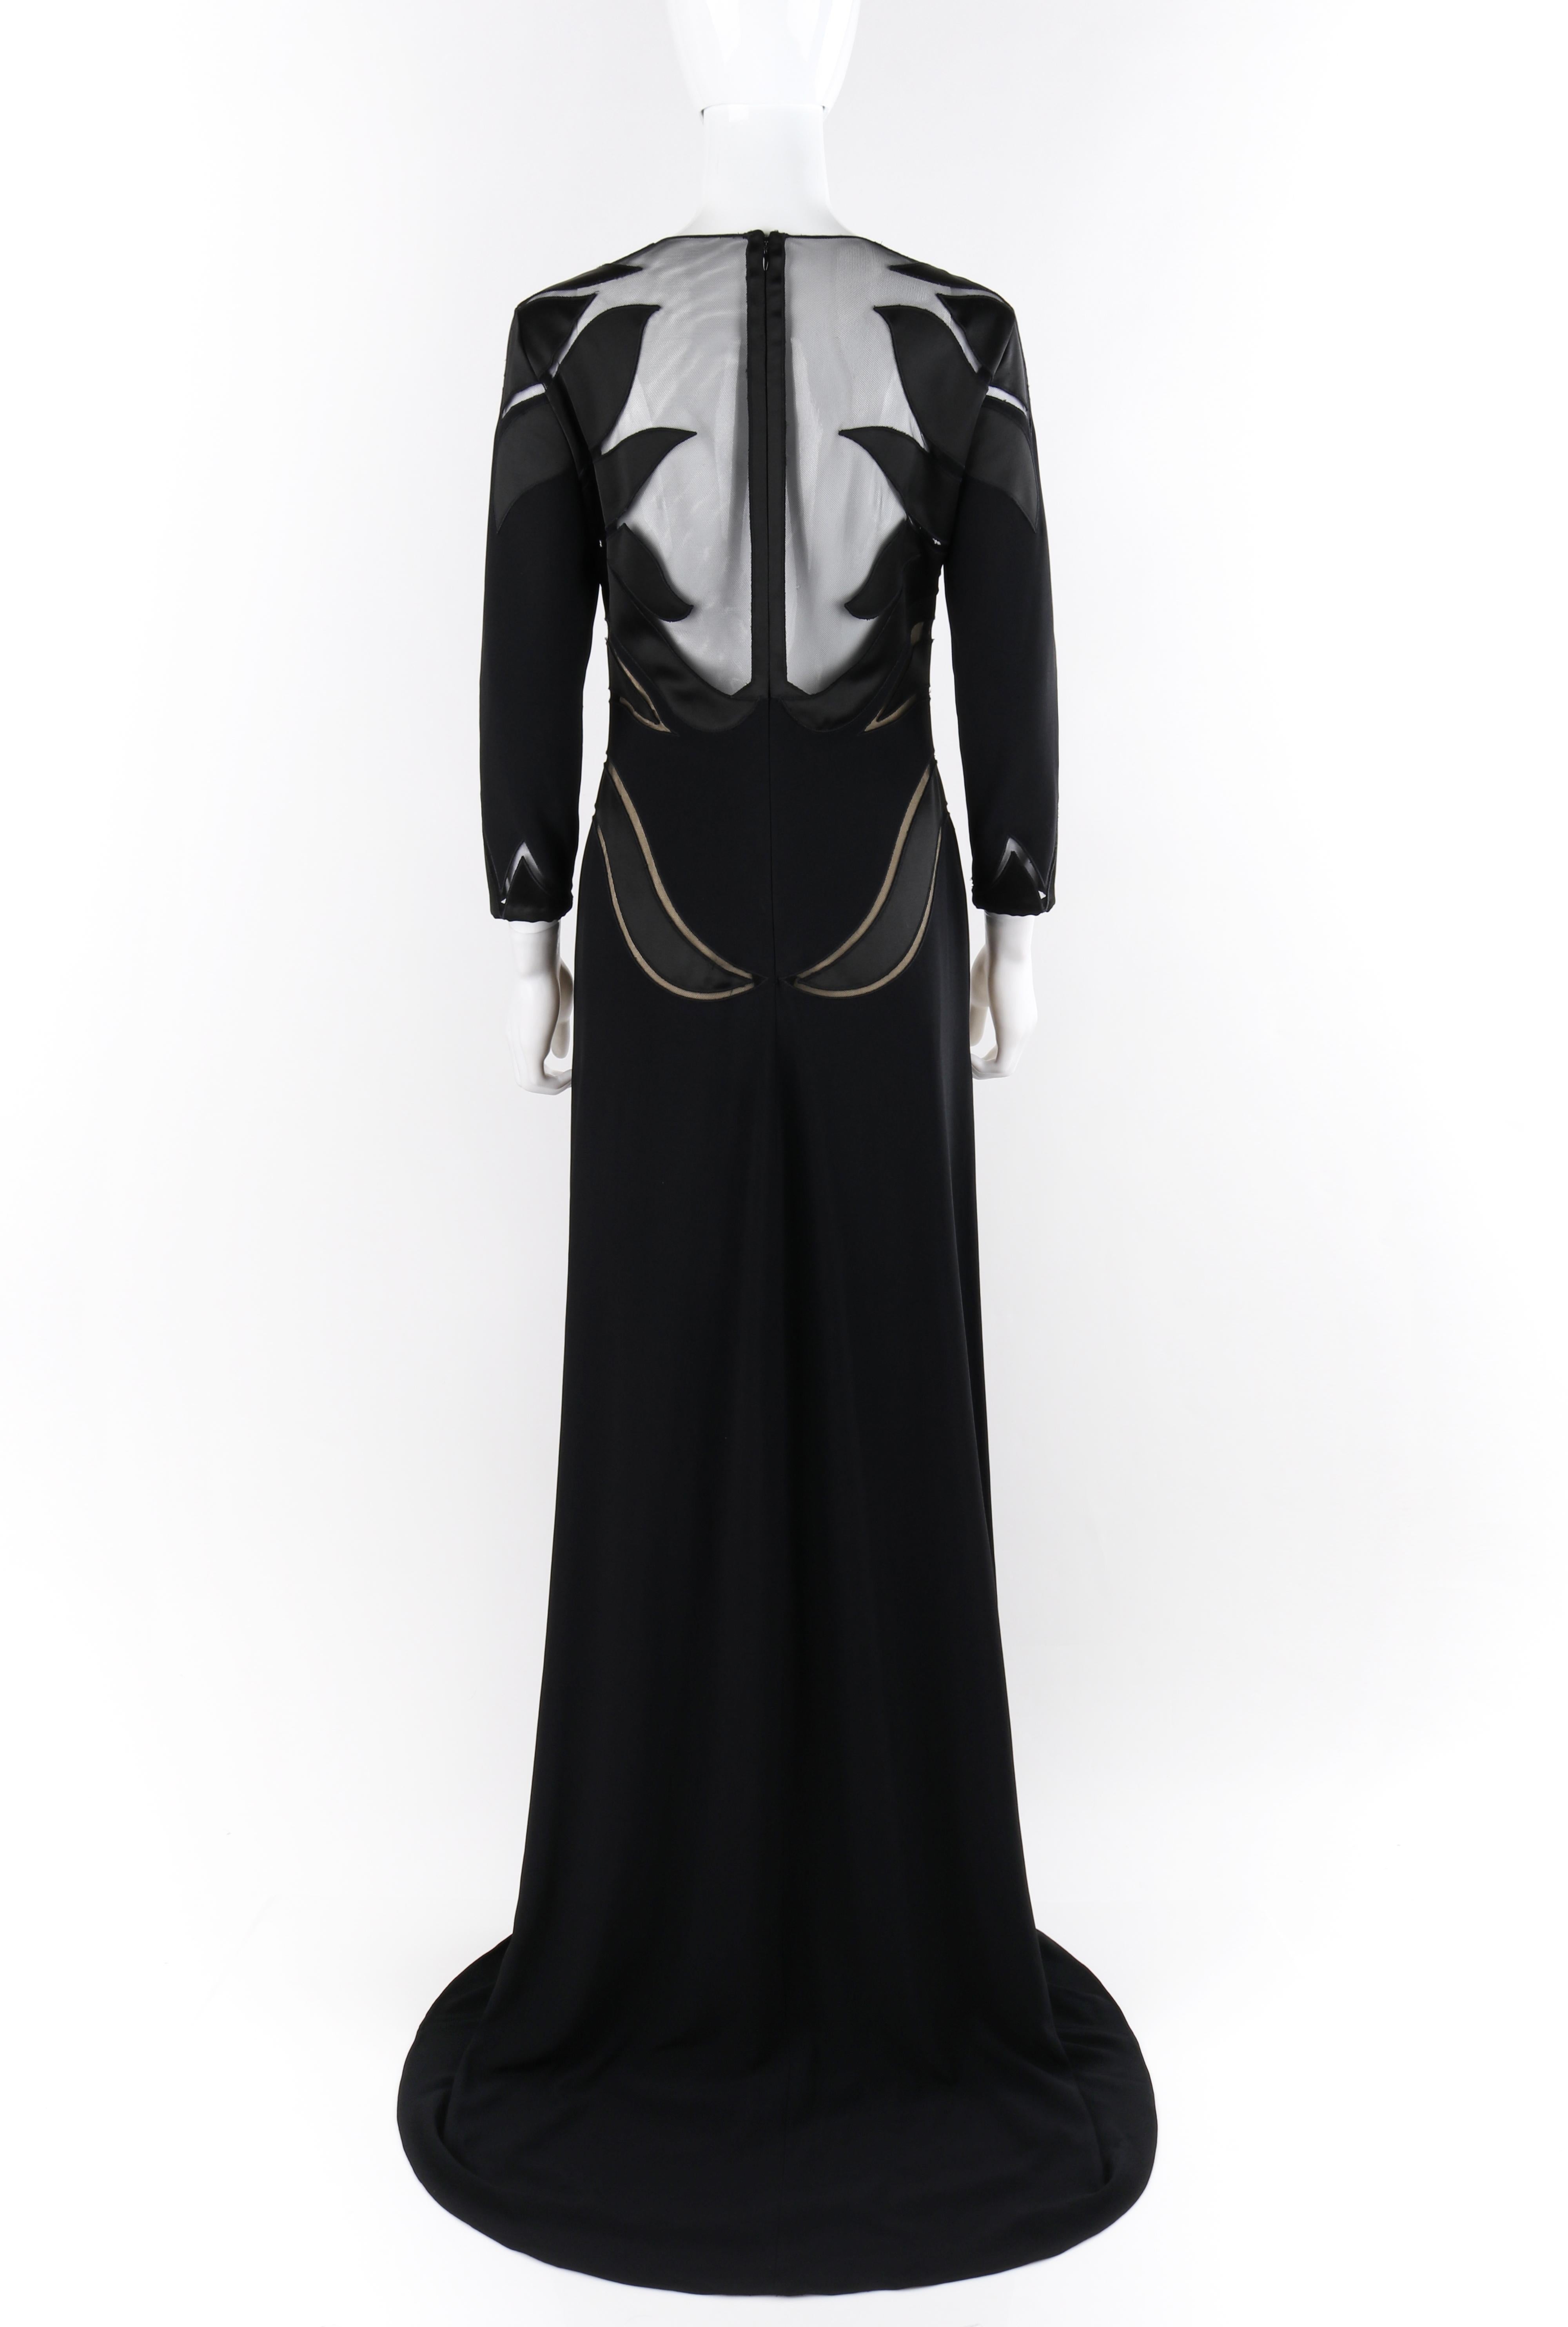 ALEXANDER McQUEEN A/W 2007 Black Sheer Long Sleeve Sweet Heart Dress Gown  For Sale 1